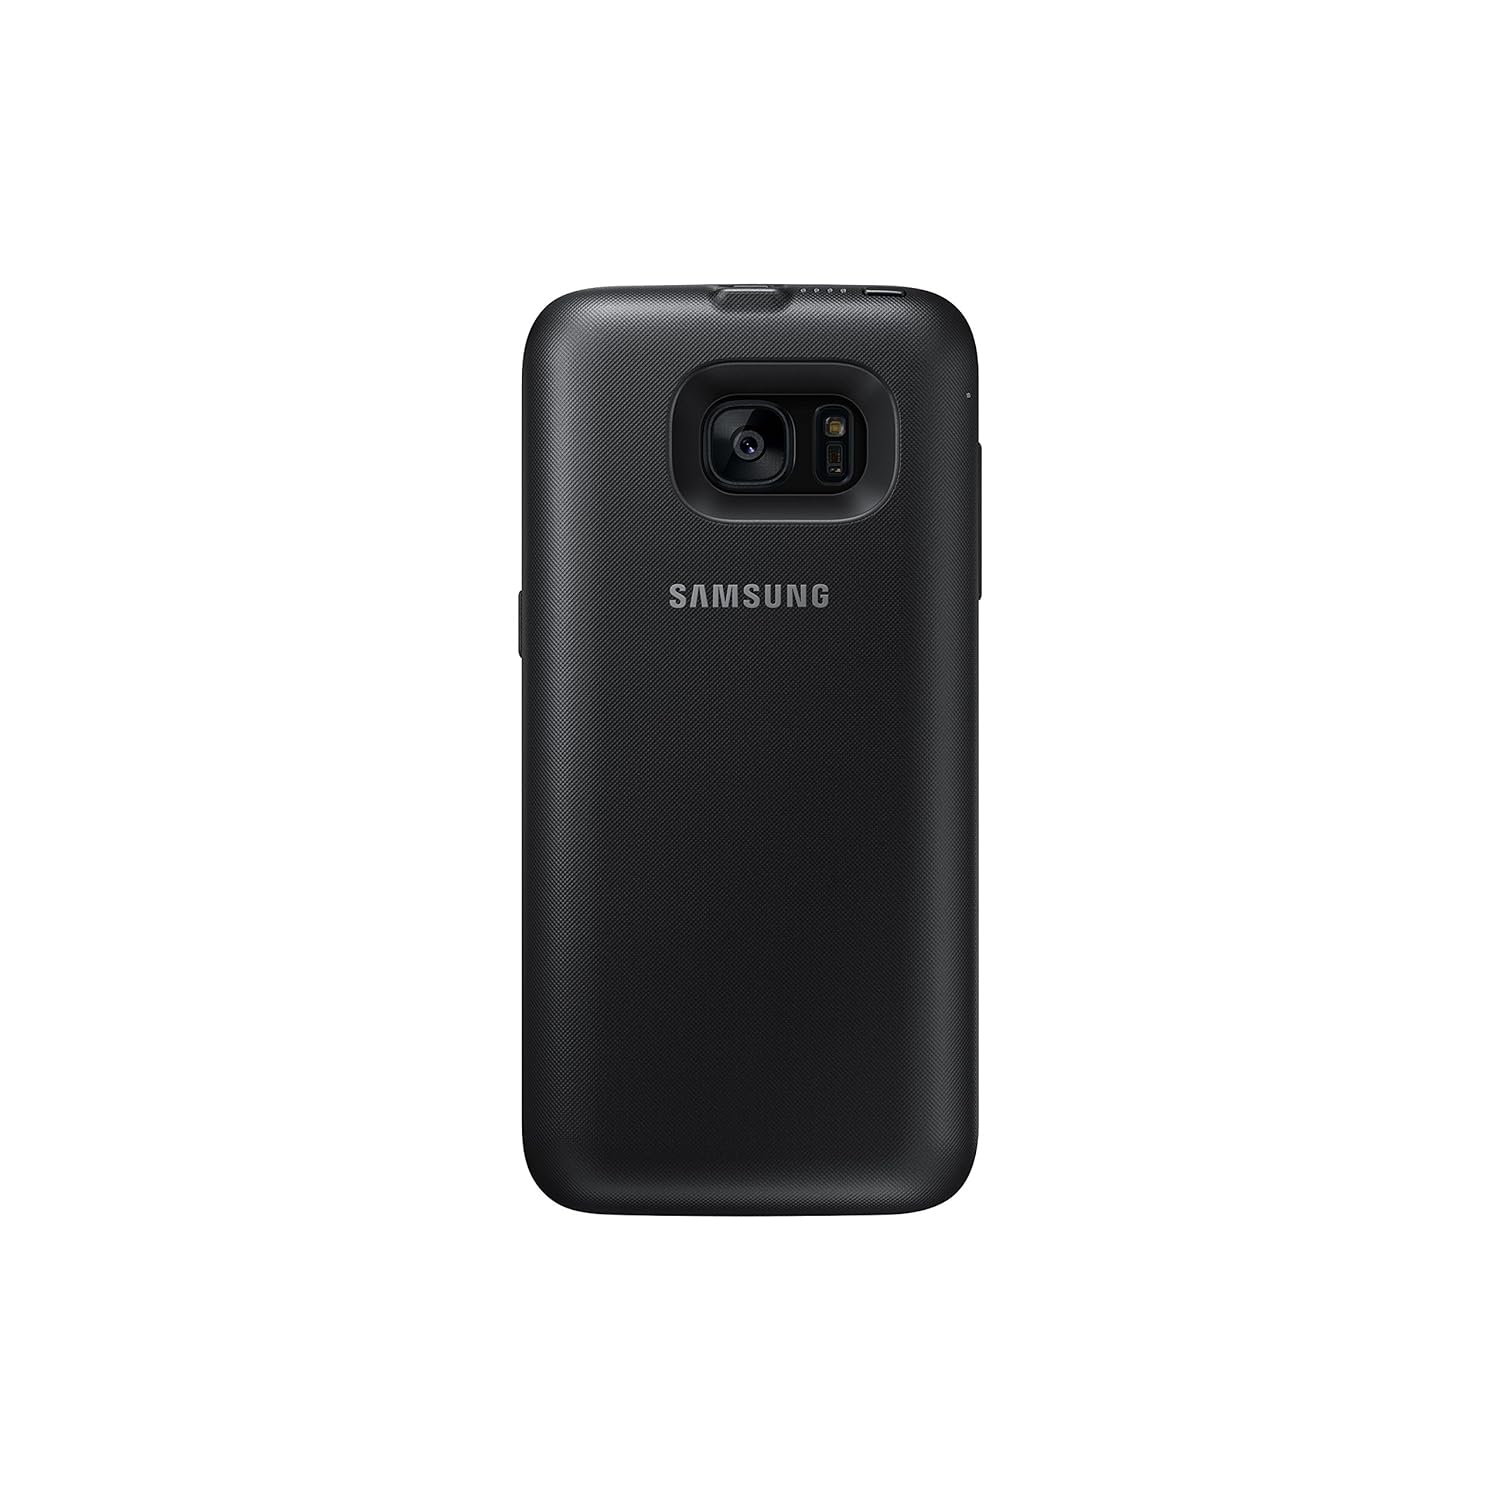 Thorns Klasseværelse Latter EP-TG935BBUGUS Samsung Galaxy S7 edge Wireless Charging Battery Pack Cover,  Black